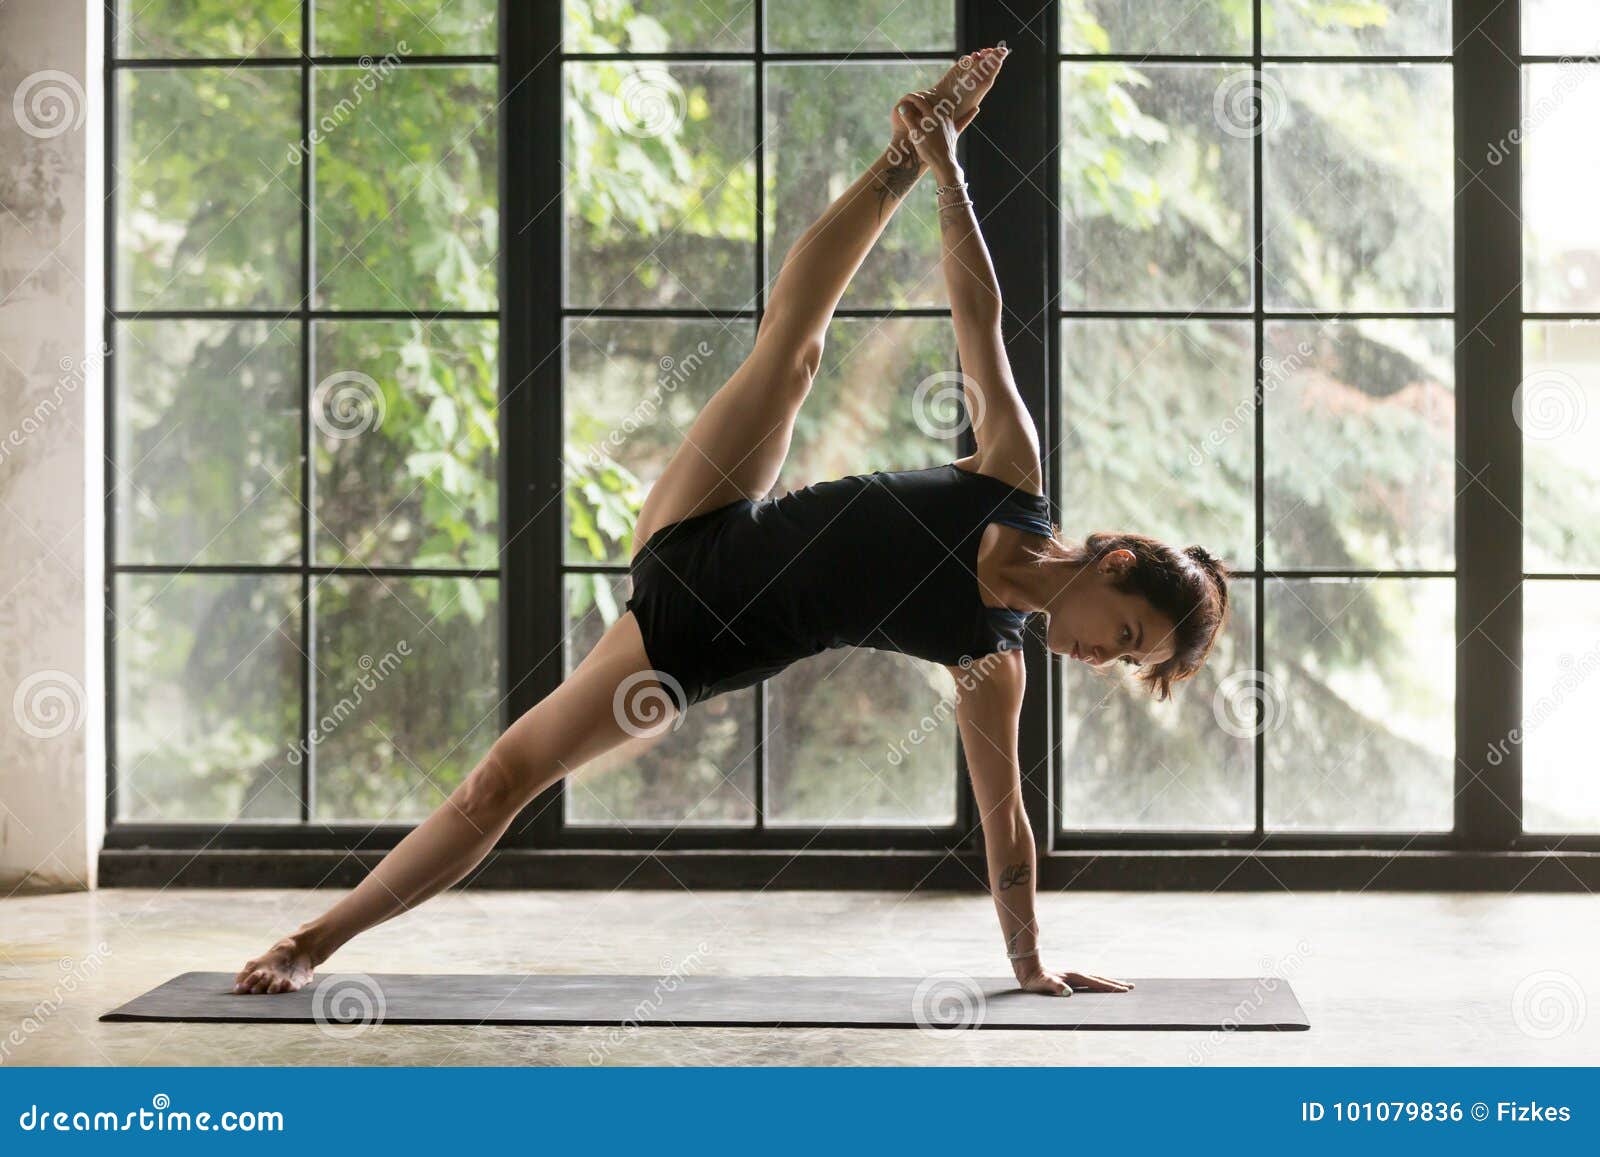 Yoga Pose: Side Plank Pose | YogaClassPlan.com